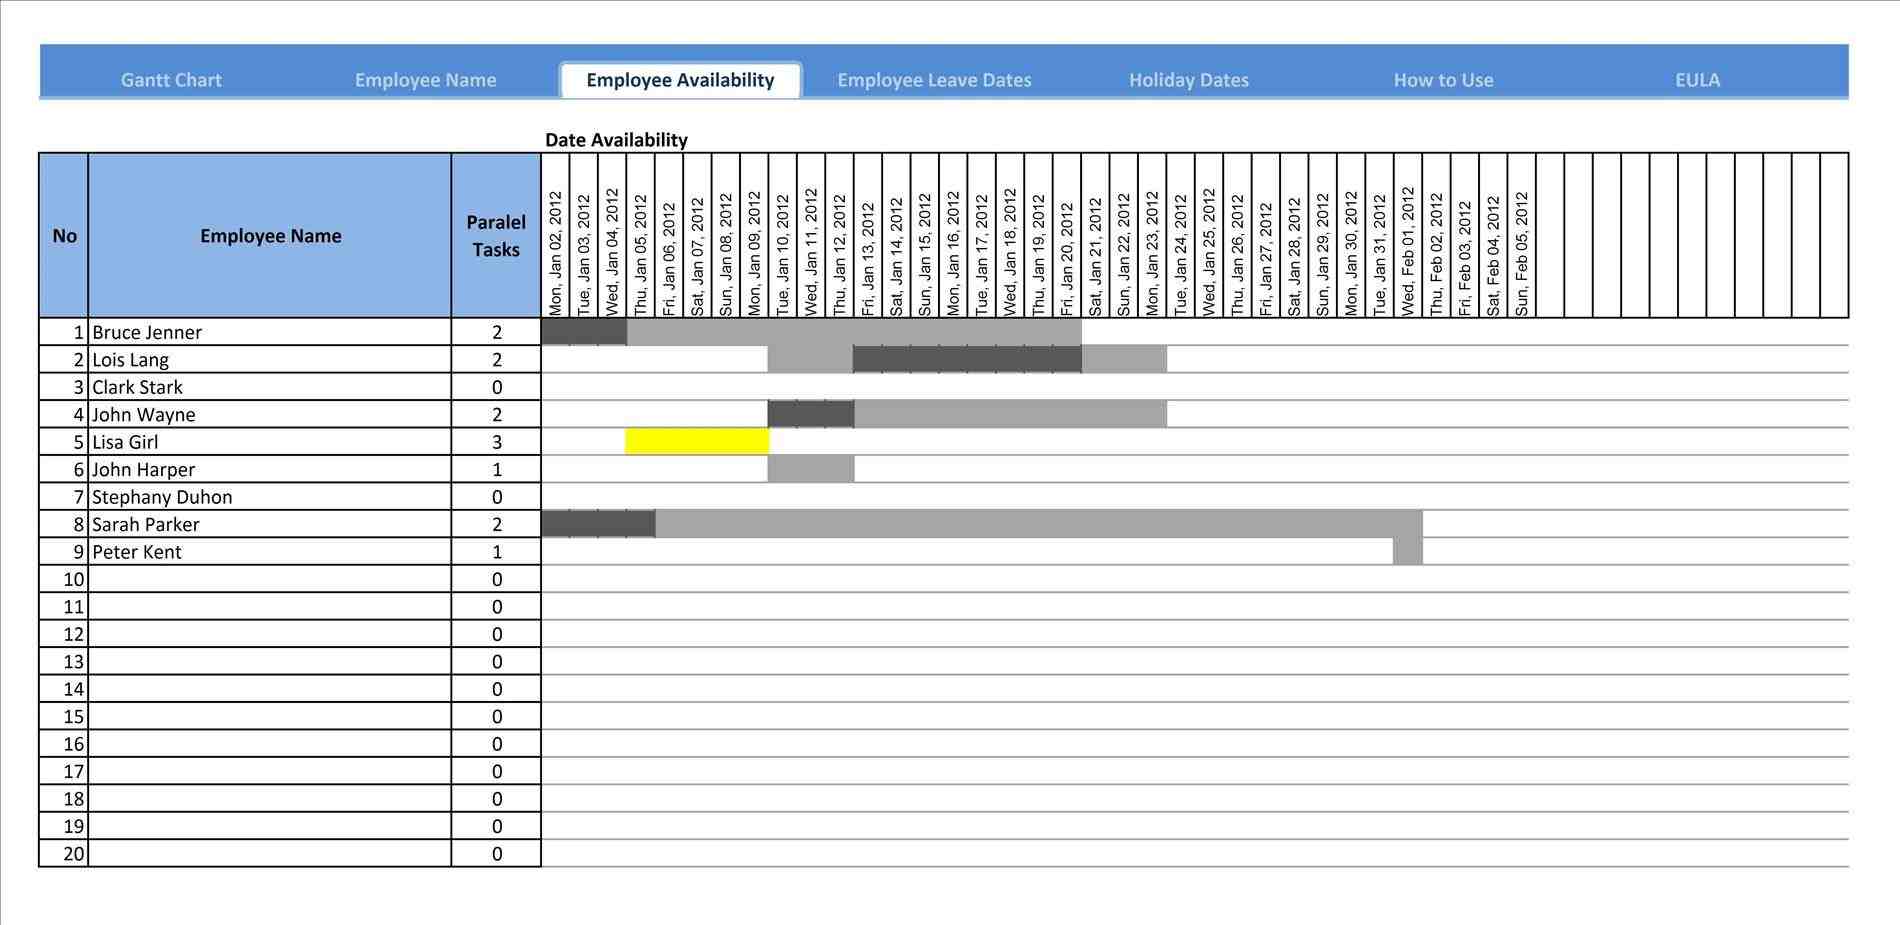 download Gantt Chart In Excel 2010 Template project management gantt chart templates for excel rhprojectmanagersinncom template rheasybusinessfinancenet gantt Gantt Chart